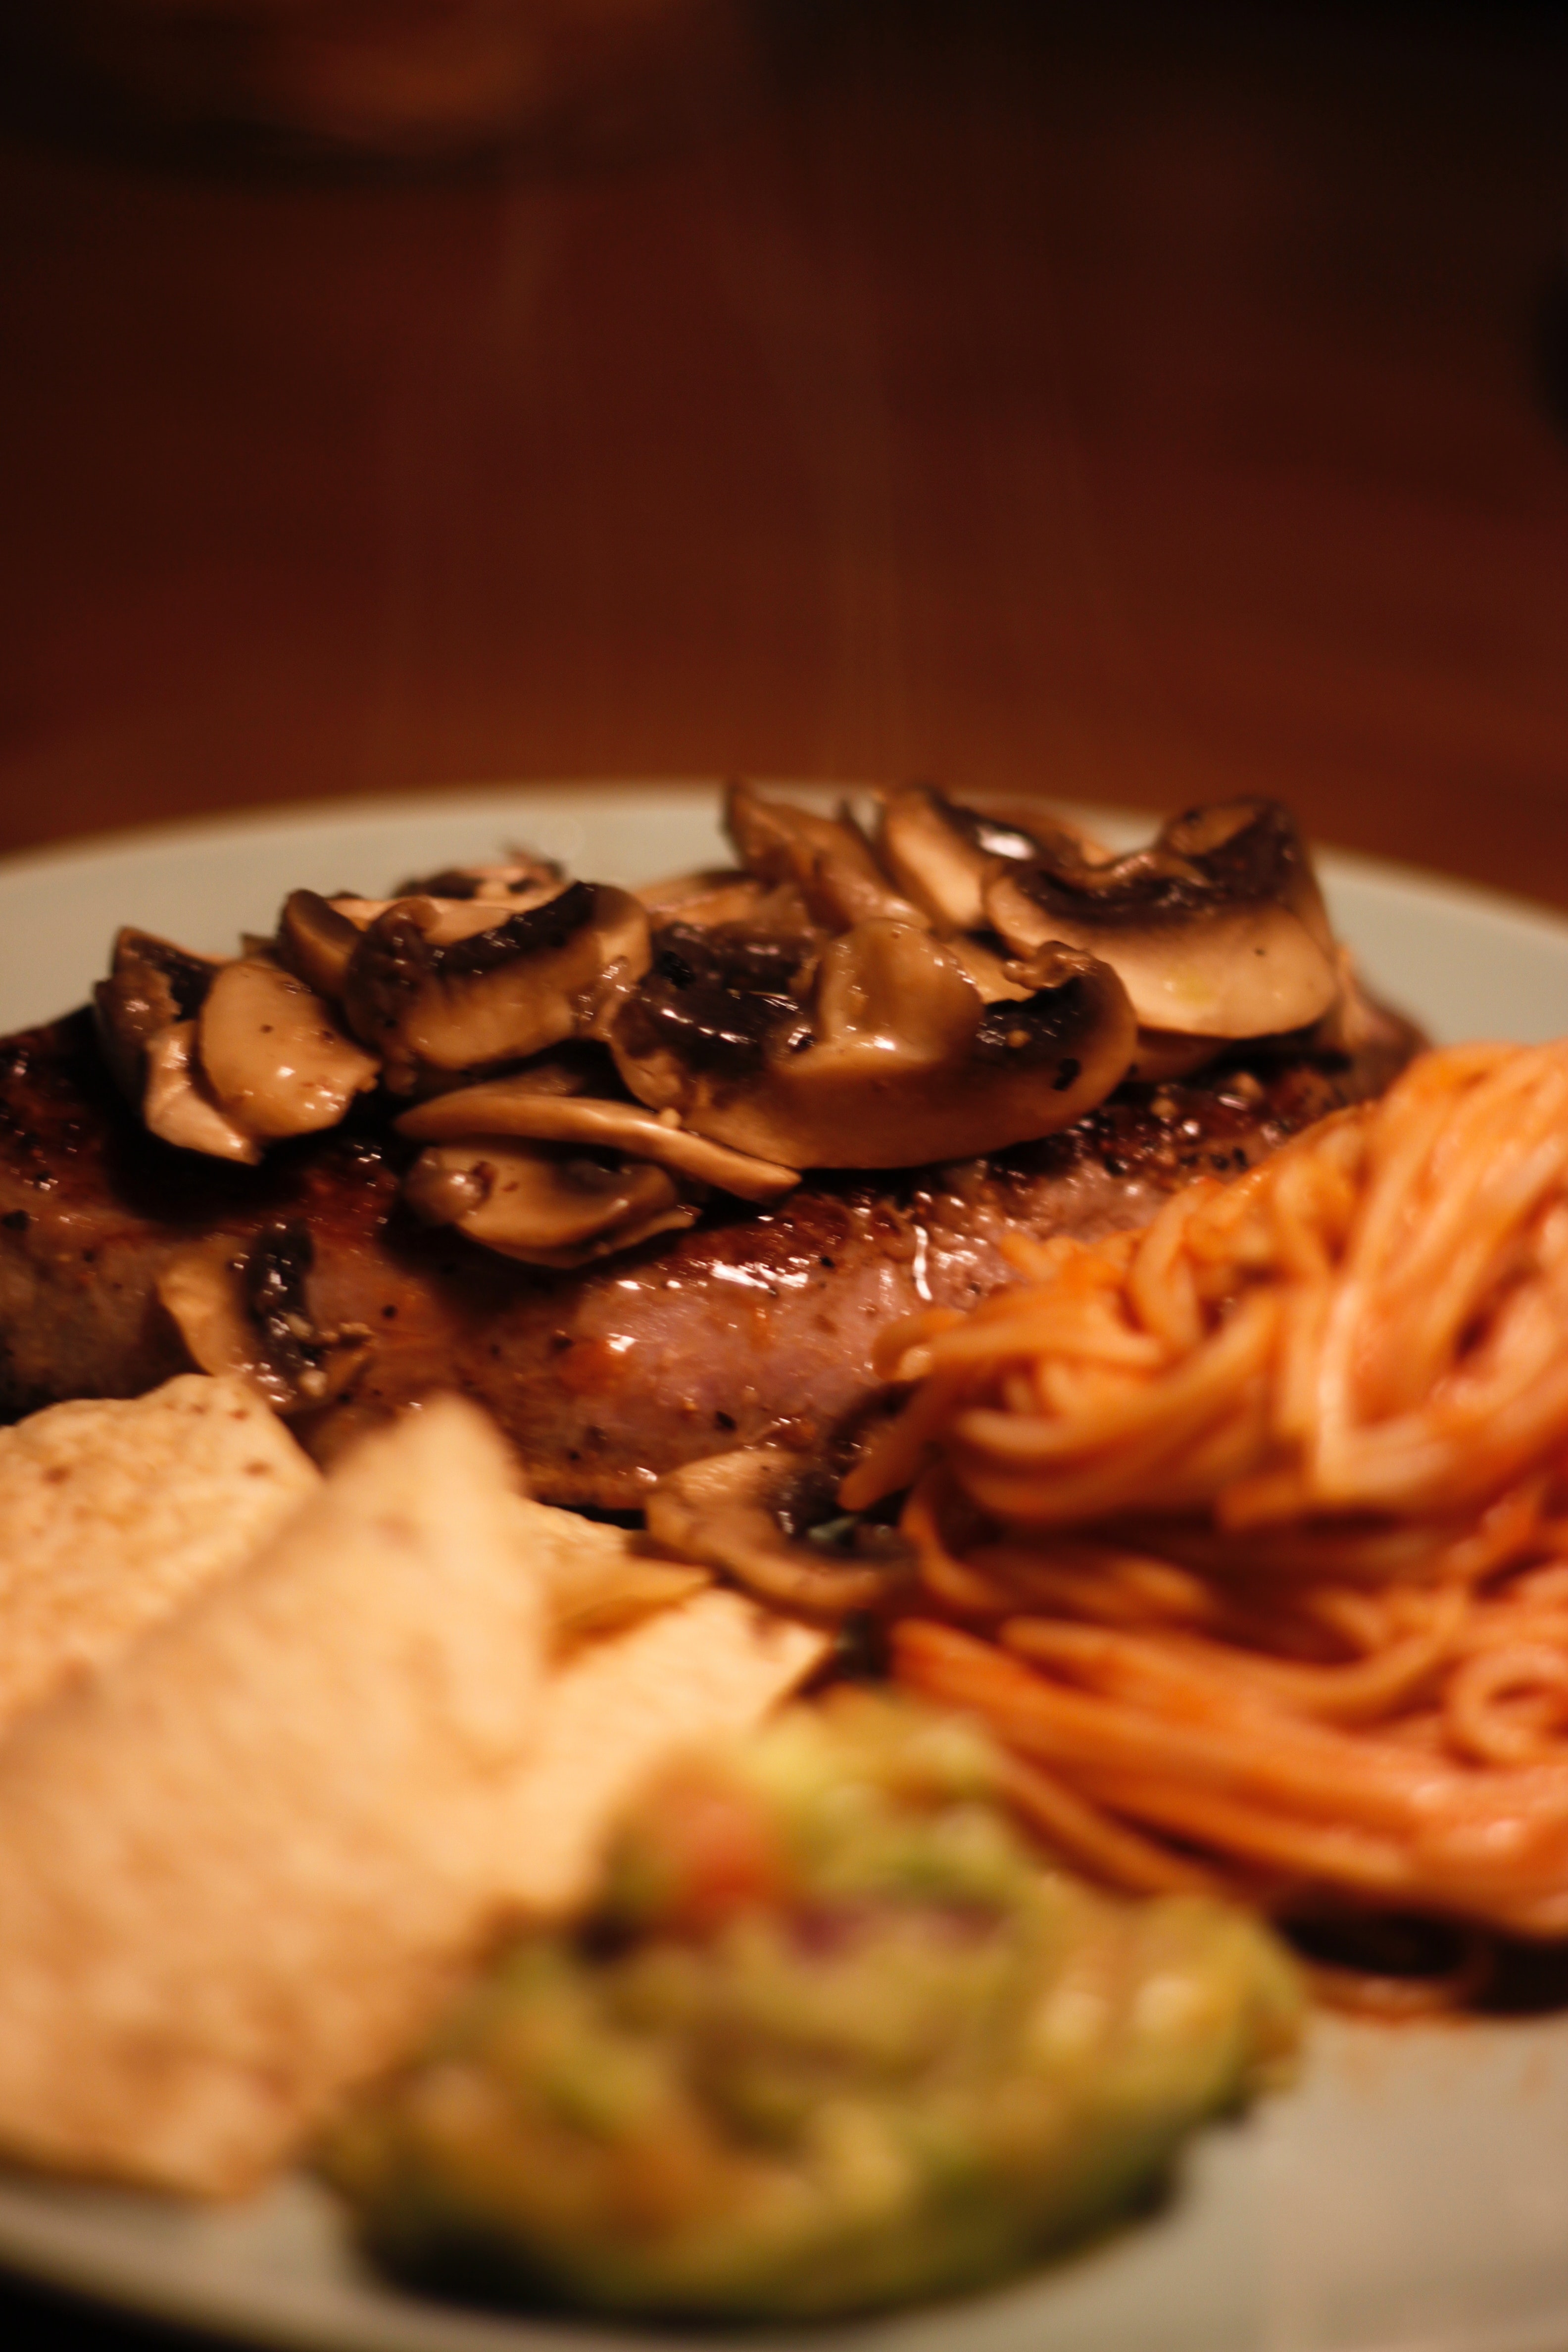 Steak with mushroom and spaghetti photo